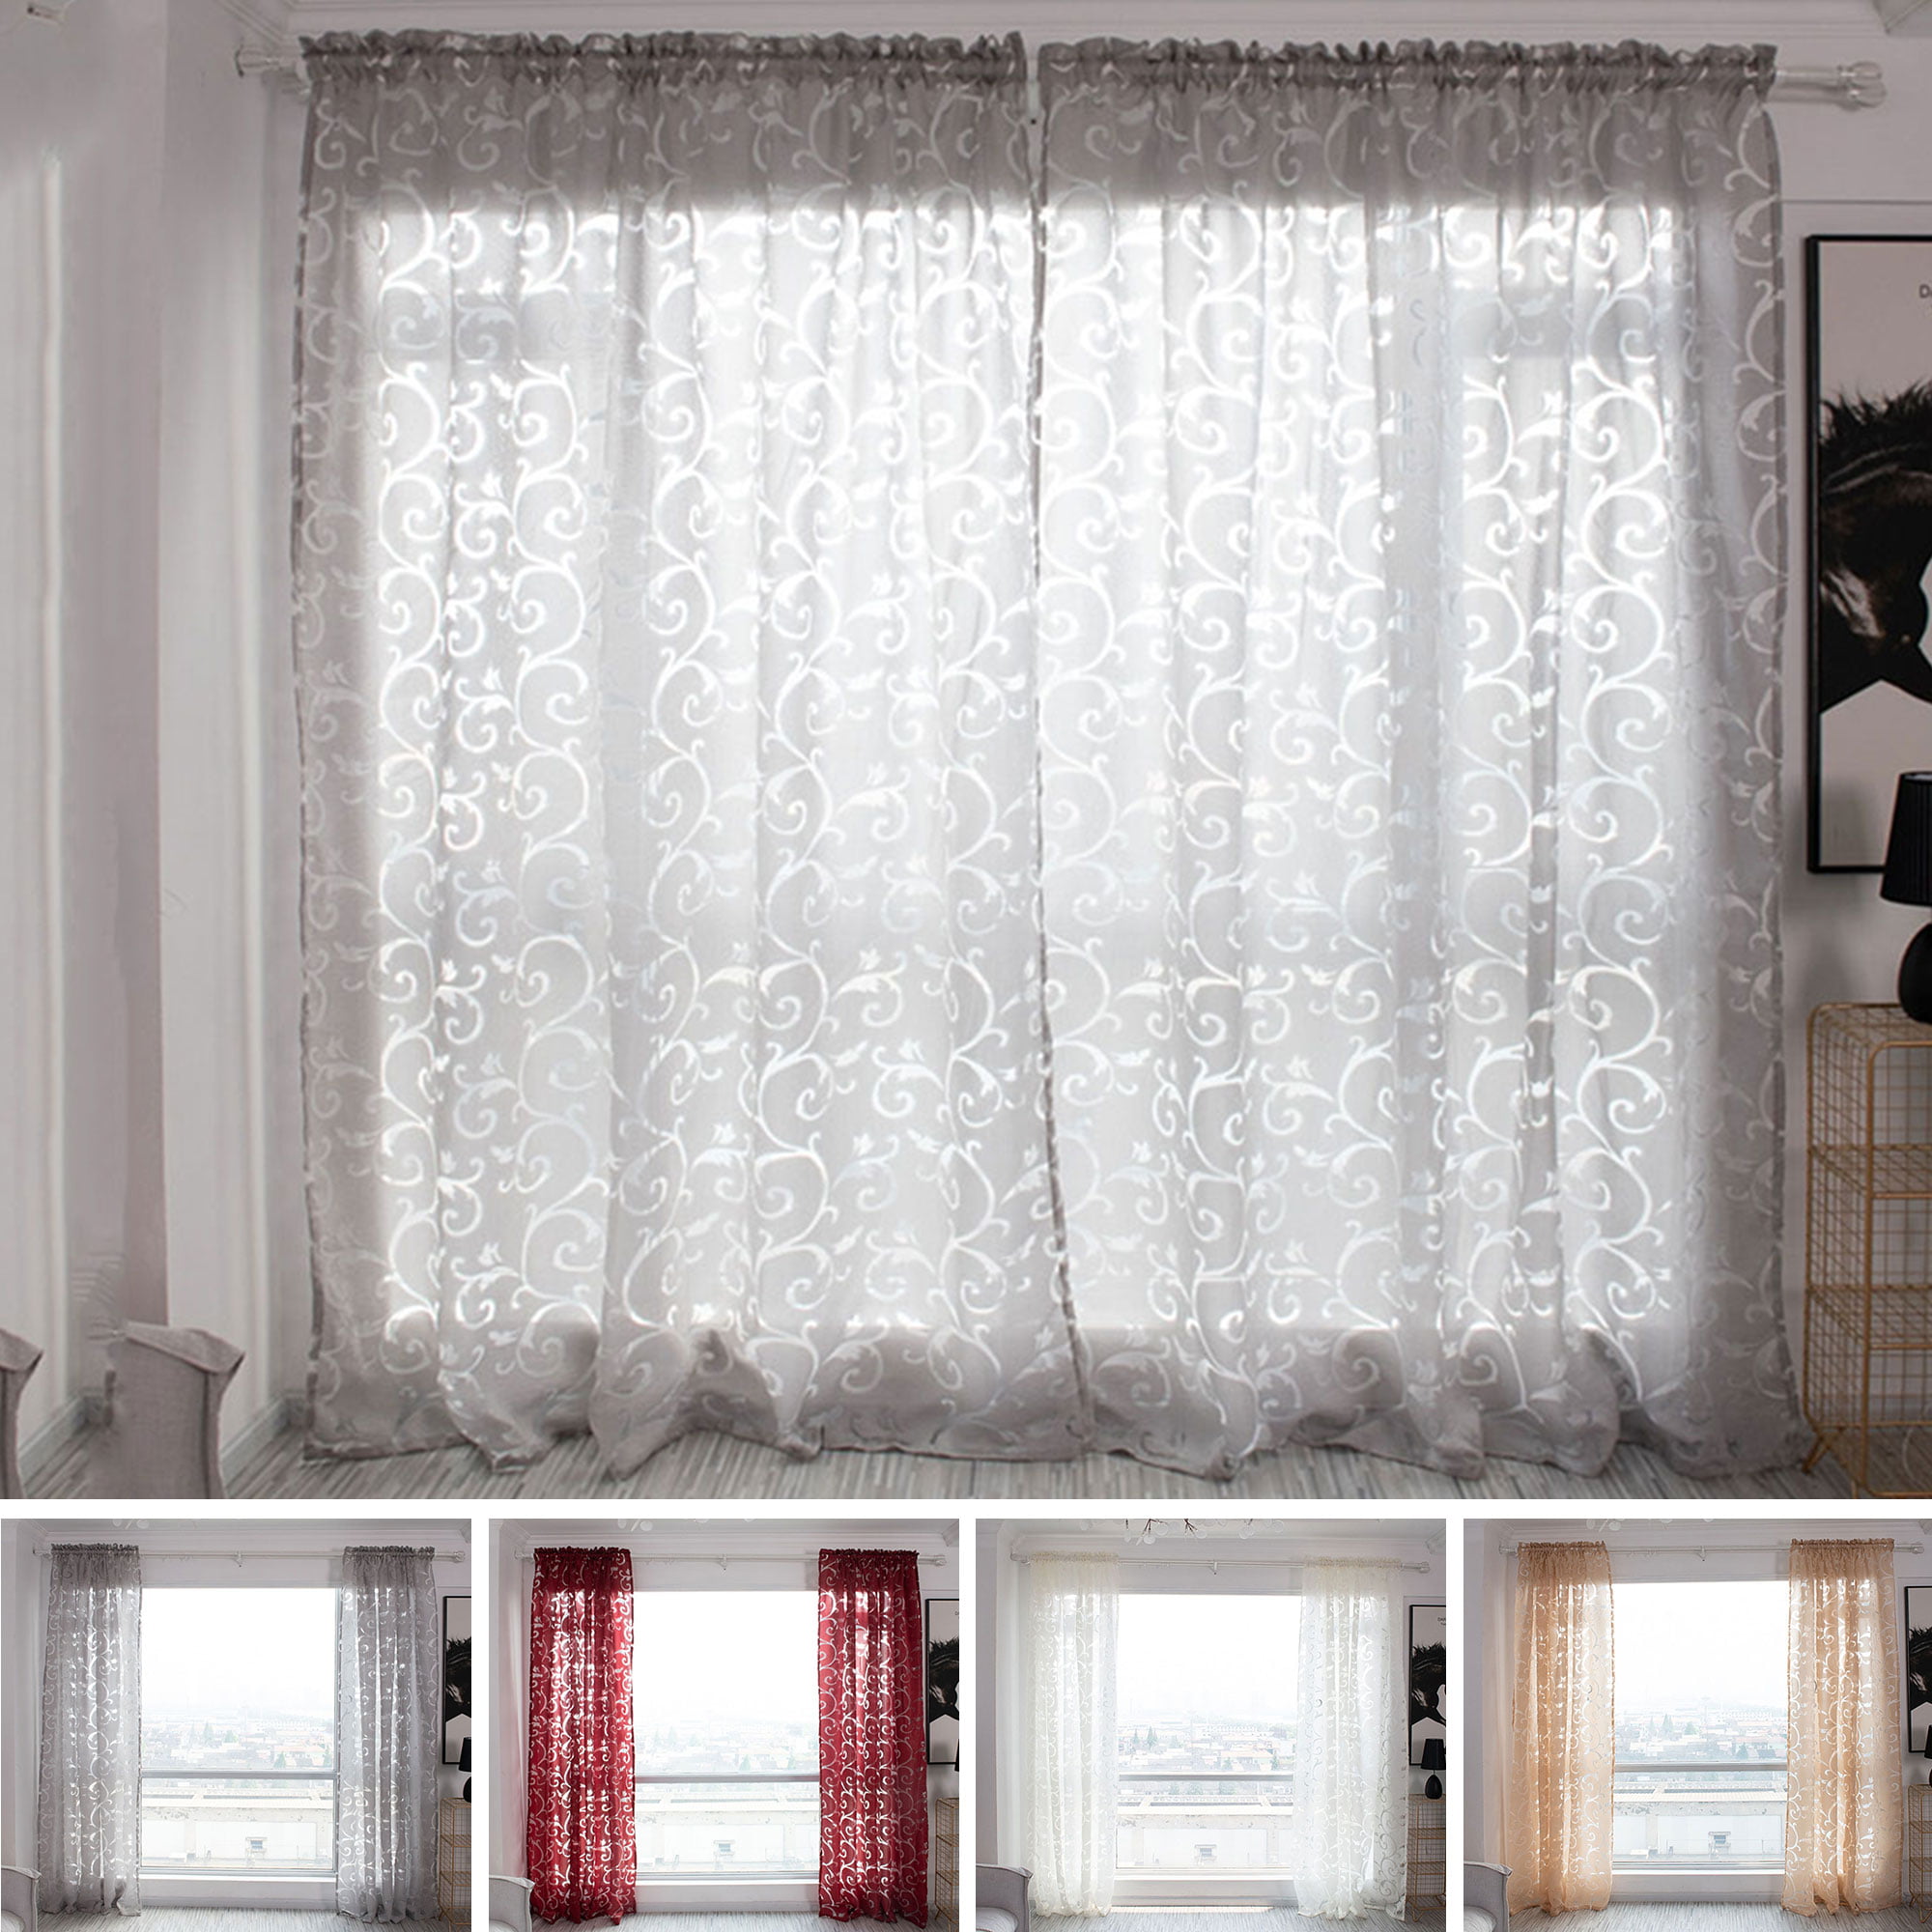 Home Door Window Romantic Curtains Voile Tulle Flower Valances Decoration 1*2m 